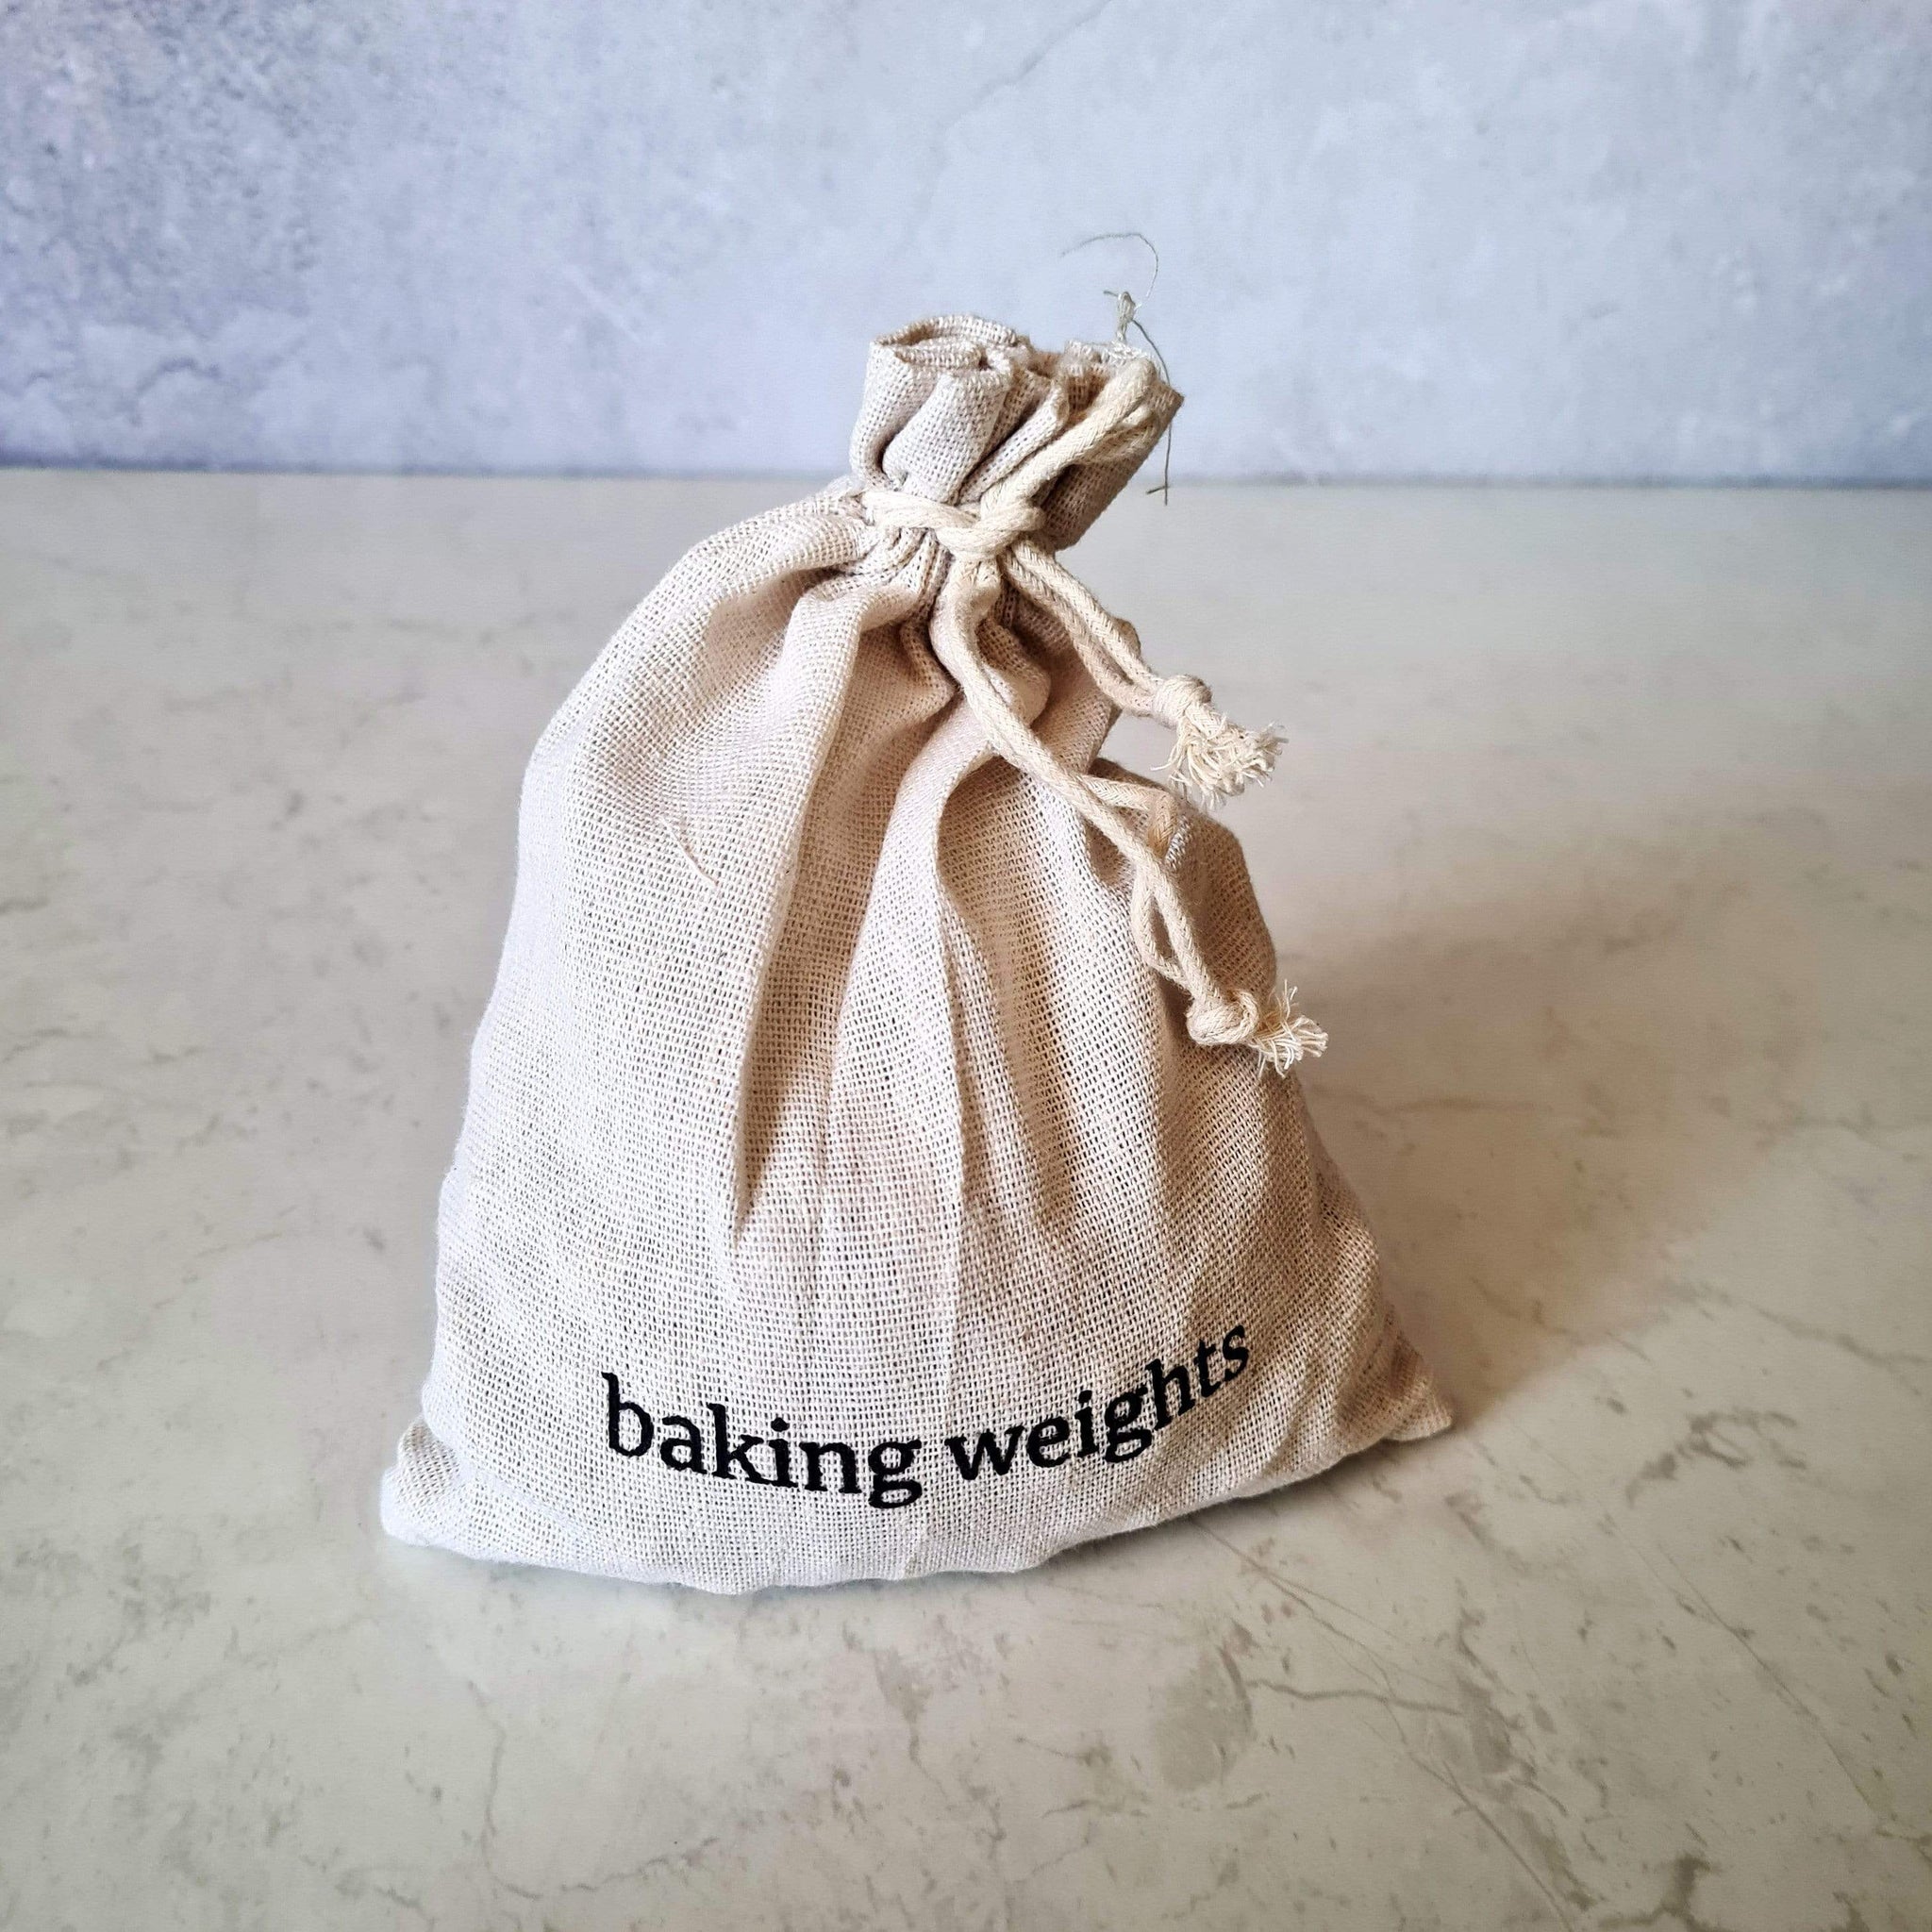 TheMix Shop Preparation Ceramic Baking Weights